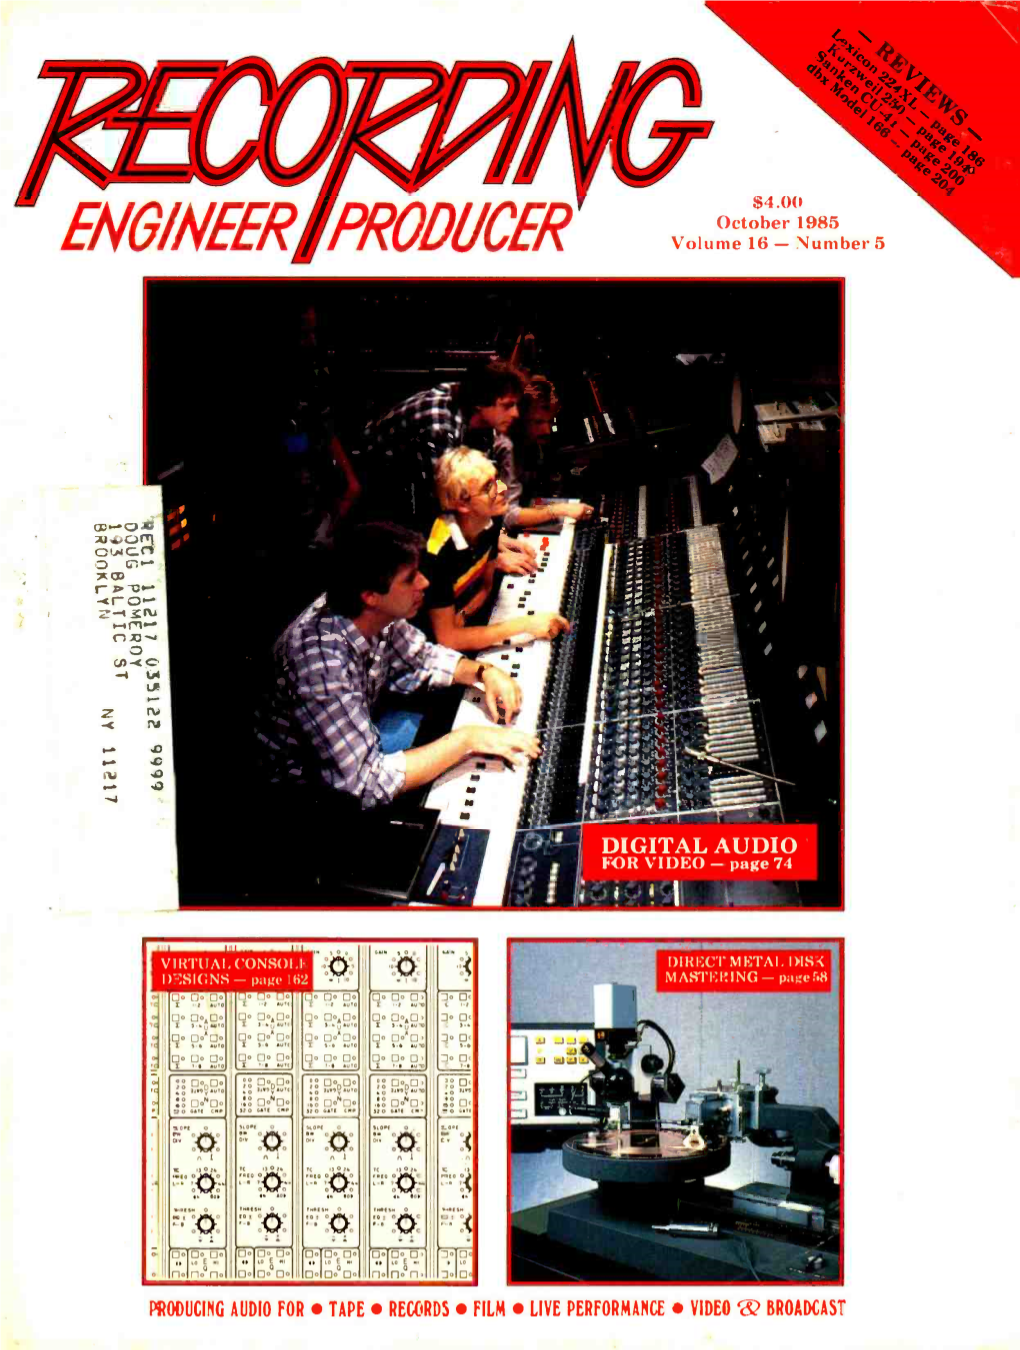 ENGINEER PRODUCER Volume 16 - Number 5